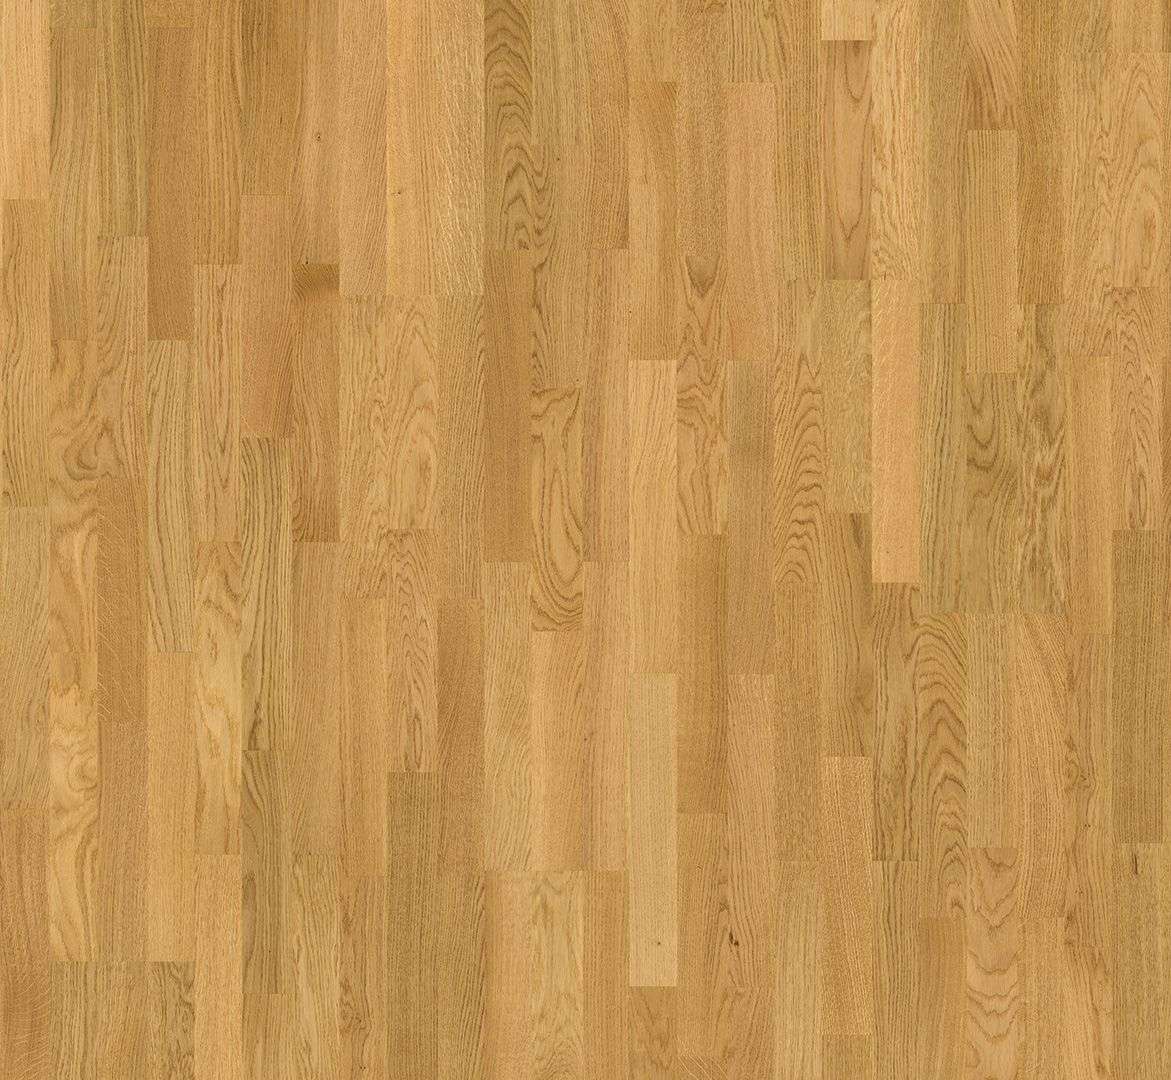 PARADOR Basic 11-5 (Dub - Natur - lak ) 1595131 - dřevěná třívrstvá podlaha